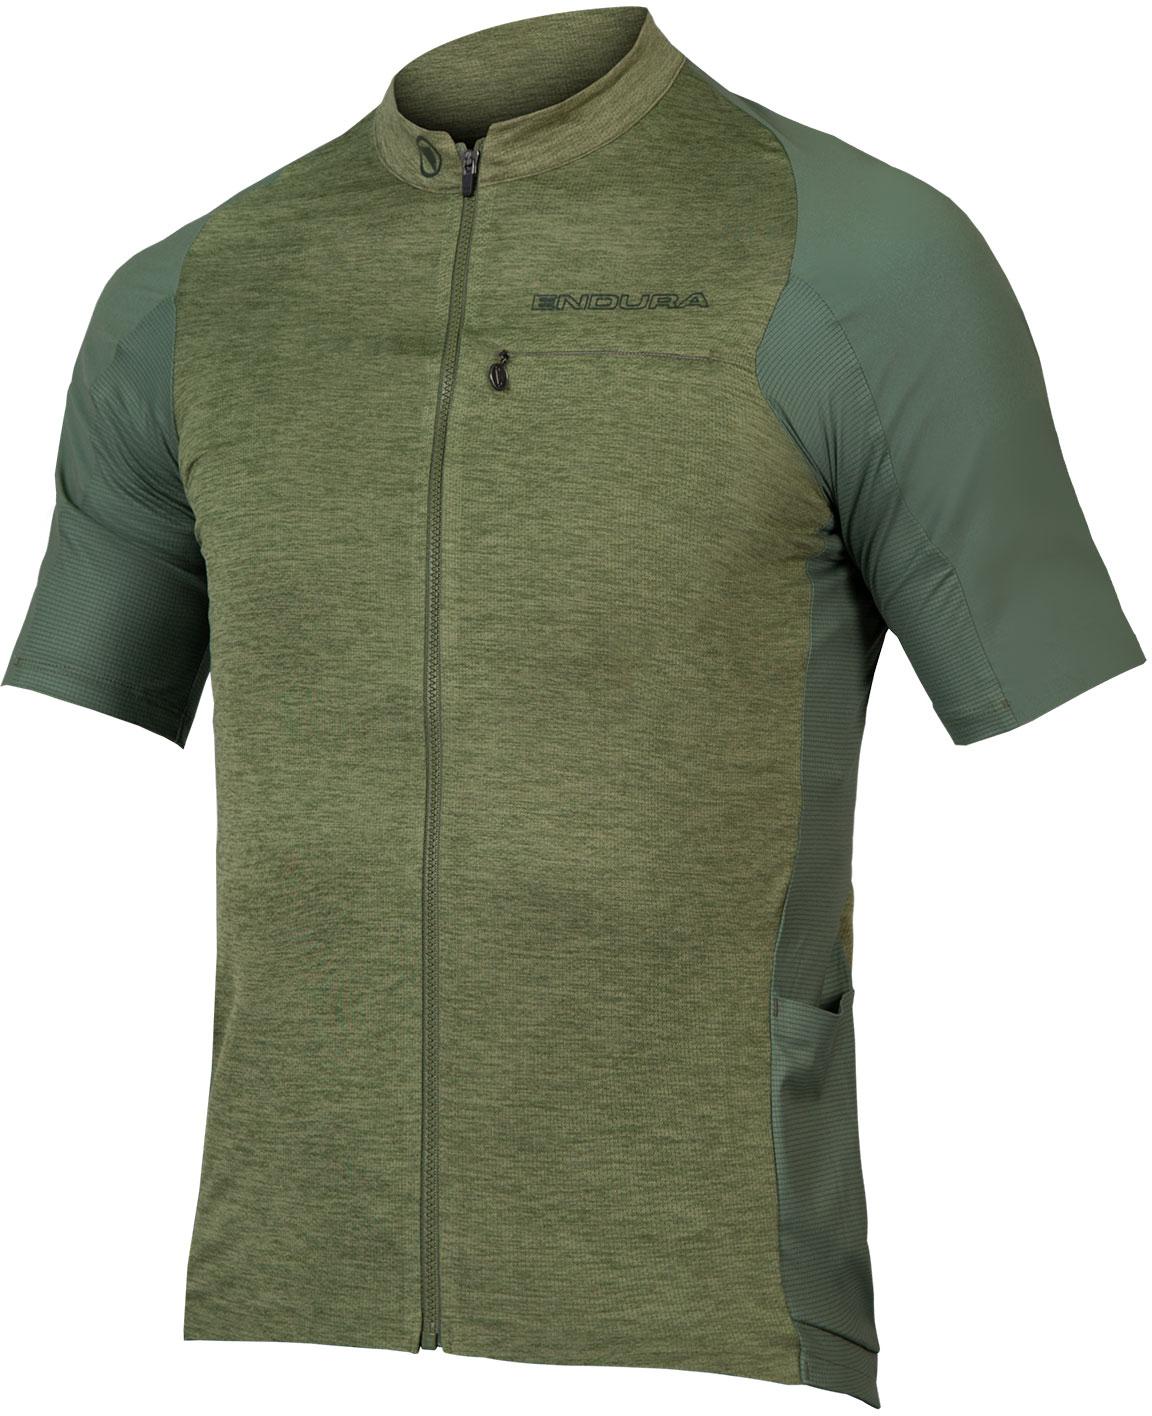 Endura Gv500 Reiver Short Sleeve Cycling Jersey - Olive Green